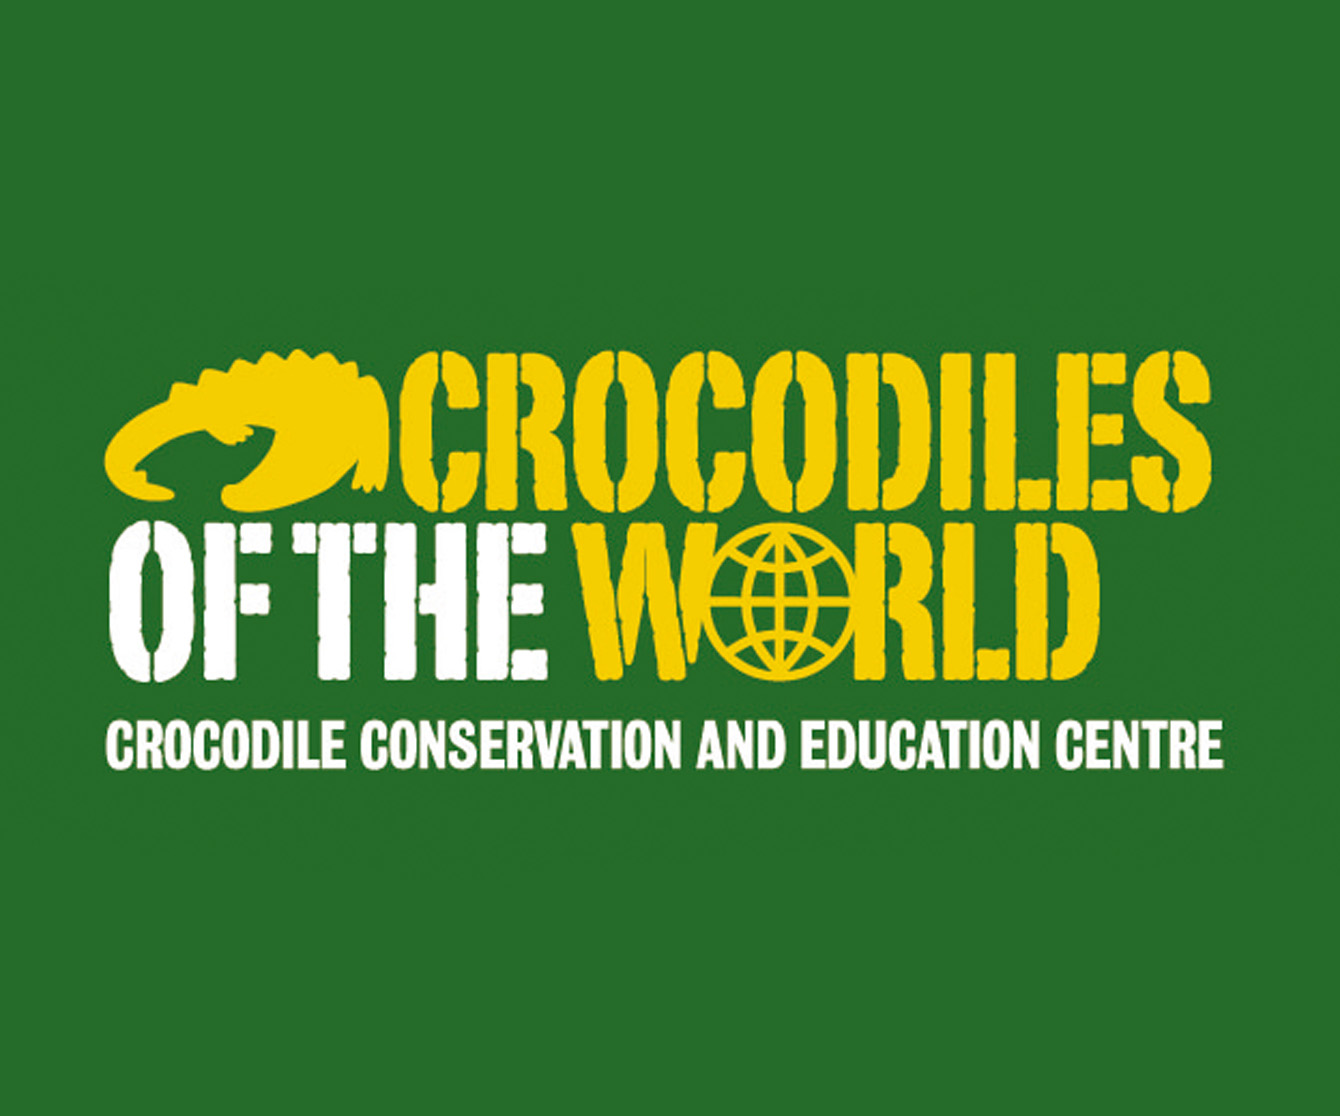 Crocodiles of the World - LOGO KeyRingCOTW - Copy.jpg